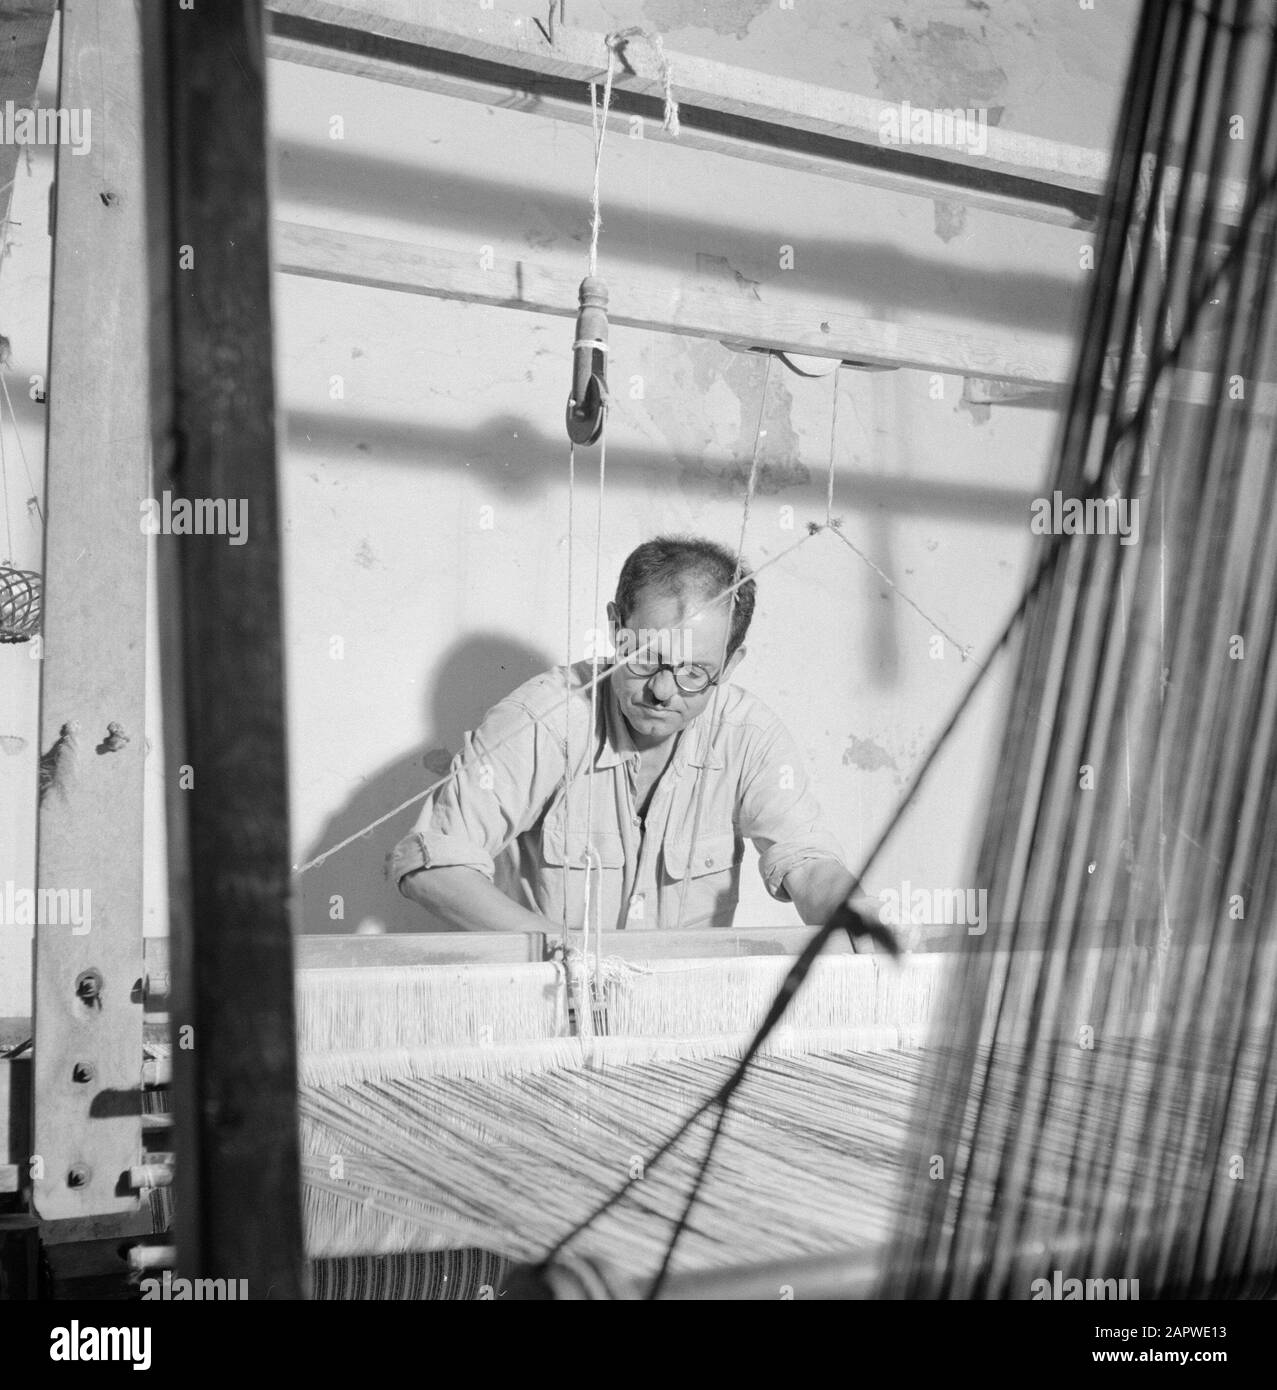 Man on a loom Date: January 1, 1964 Location: Israel Keywords: collaborators, weaving Stock Photo